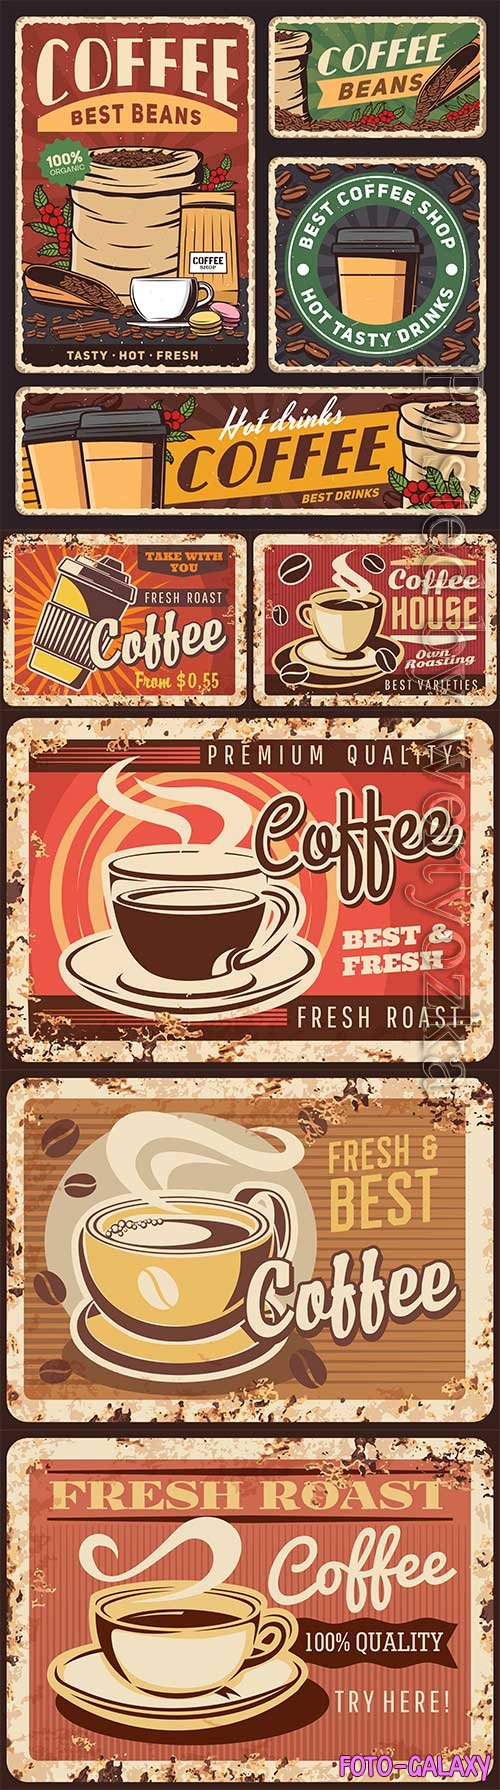 Coffee vintage advertising posters in vector